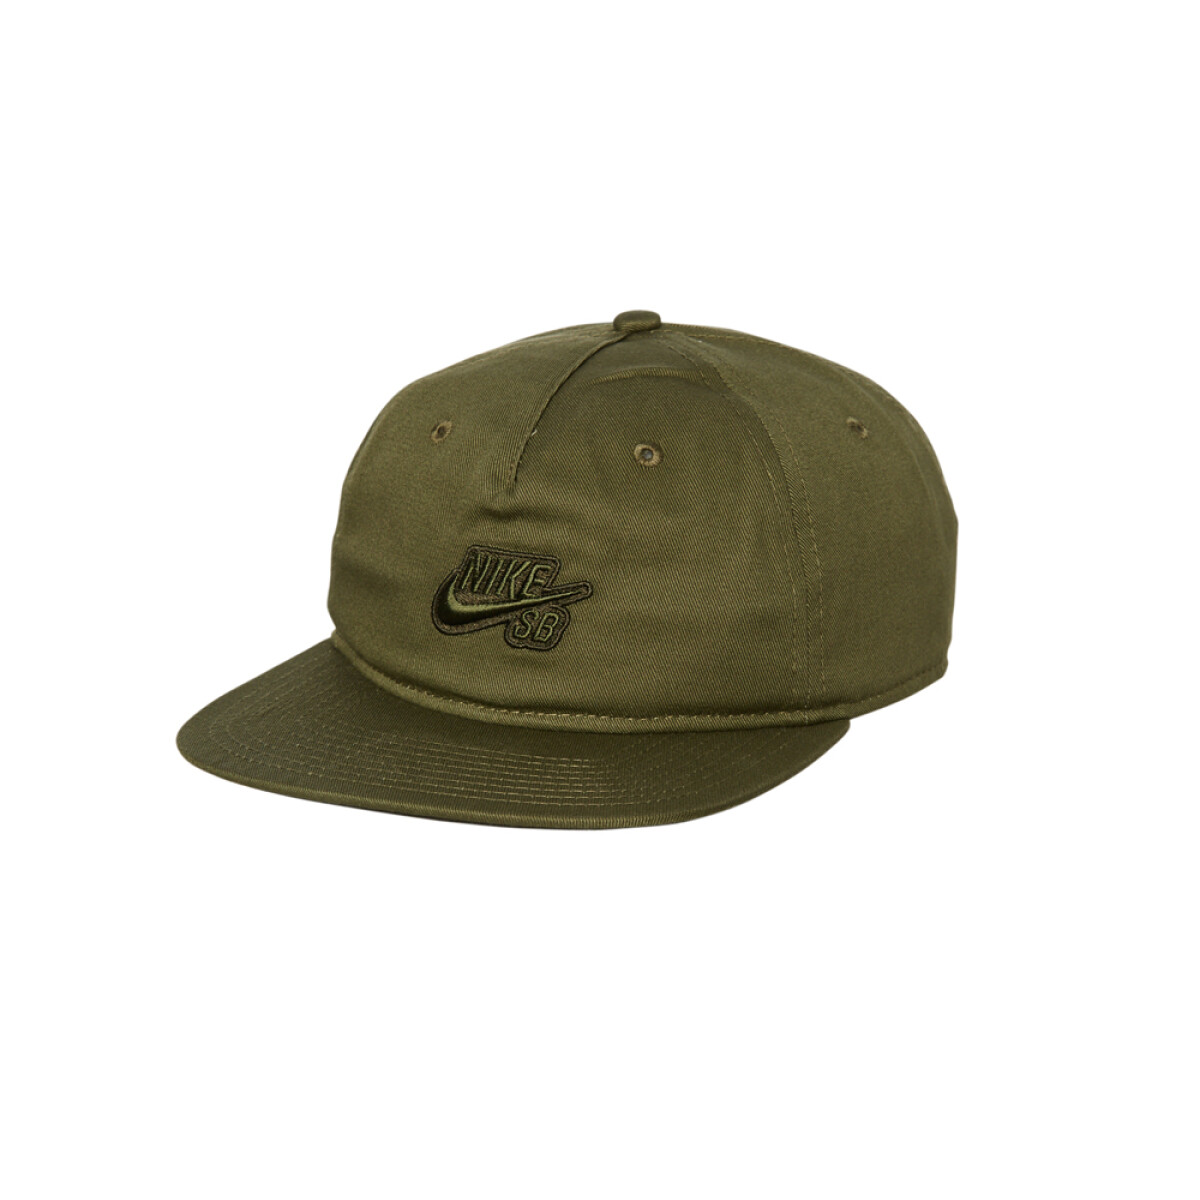 NIKE SB PRO ADJUSTABLE CAP - Green 